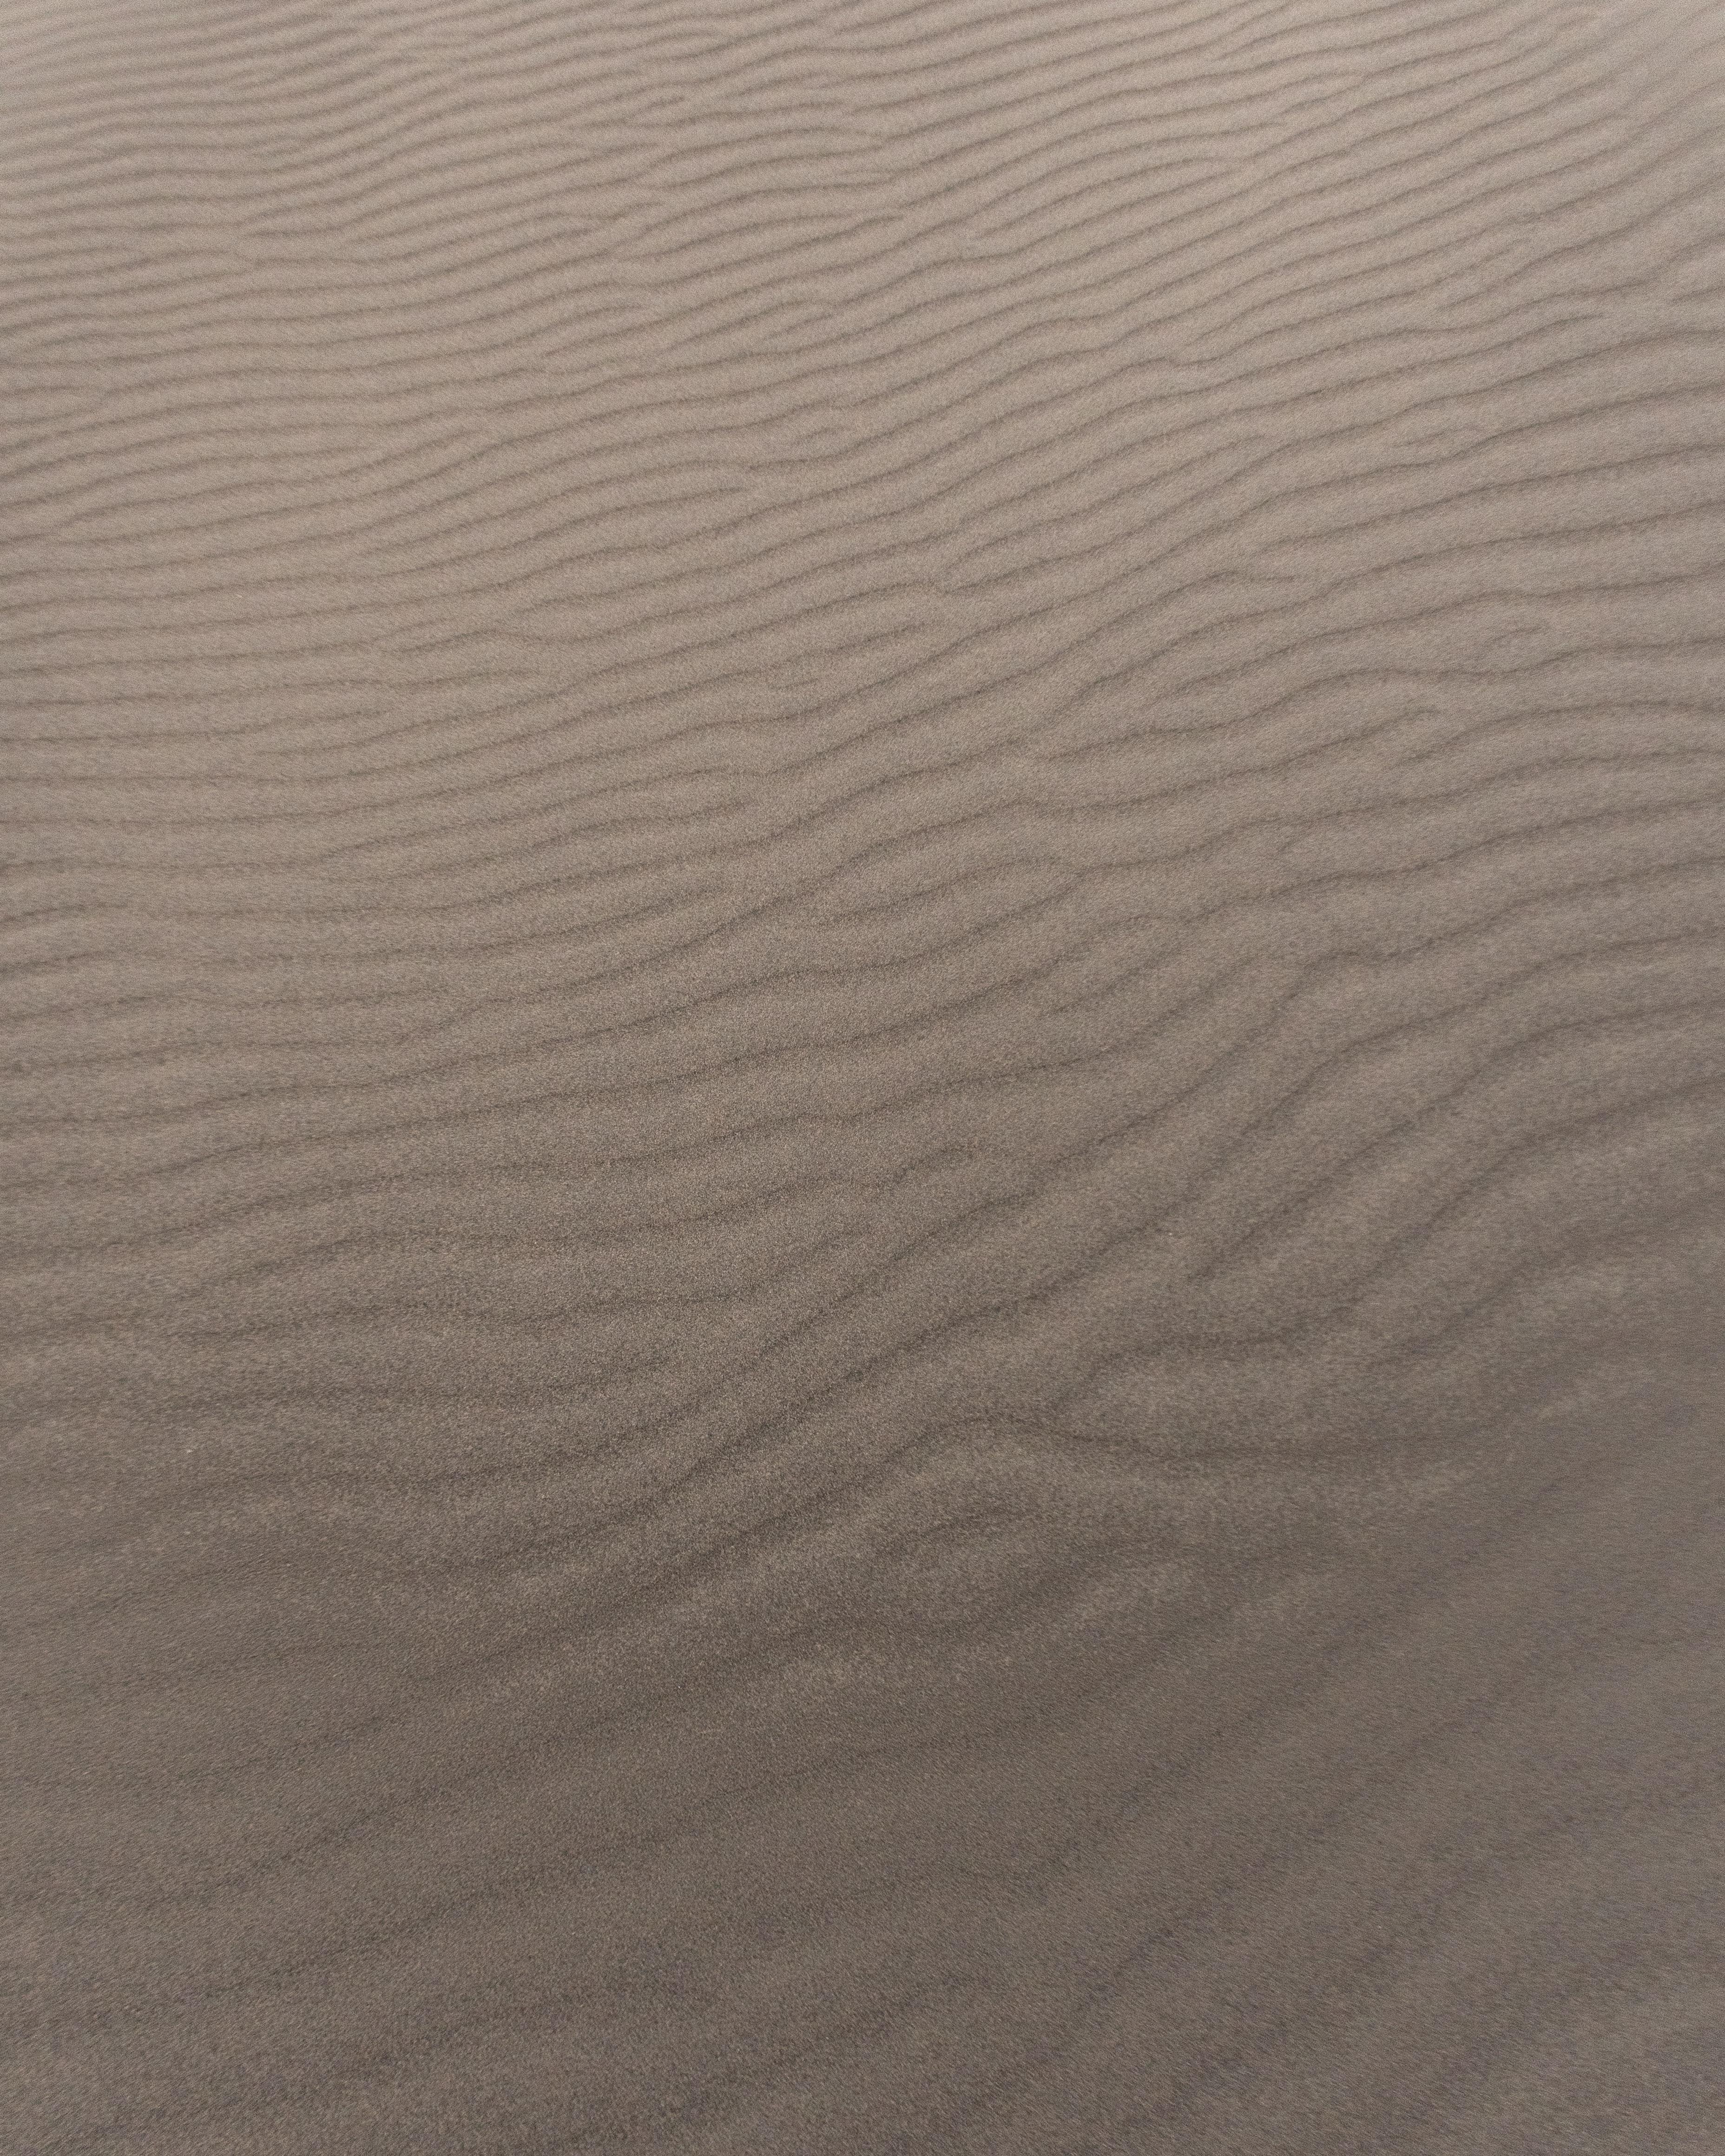 desktop Images waves, sand, desert, texture, textures, stripes, streaks